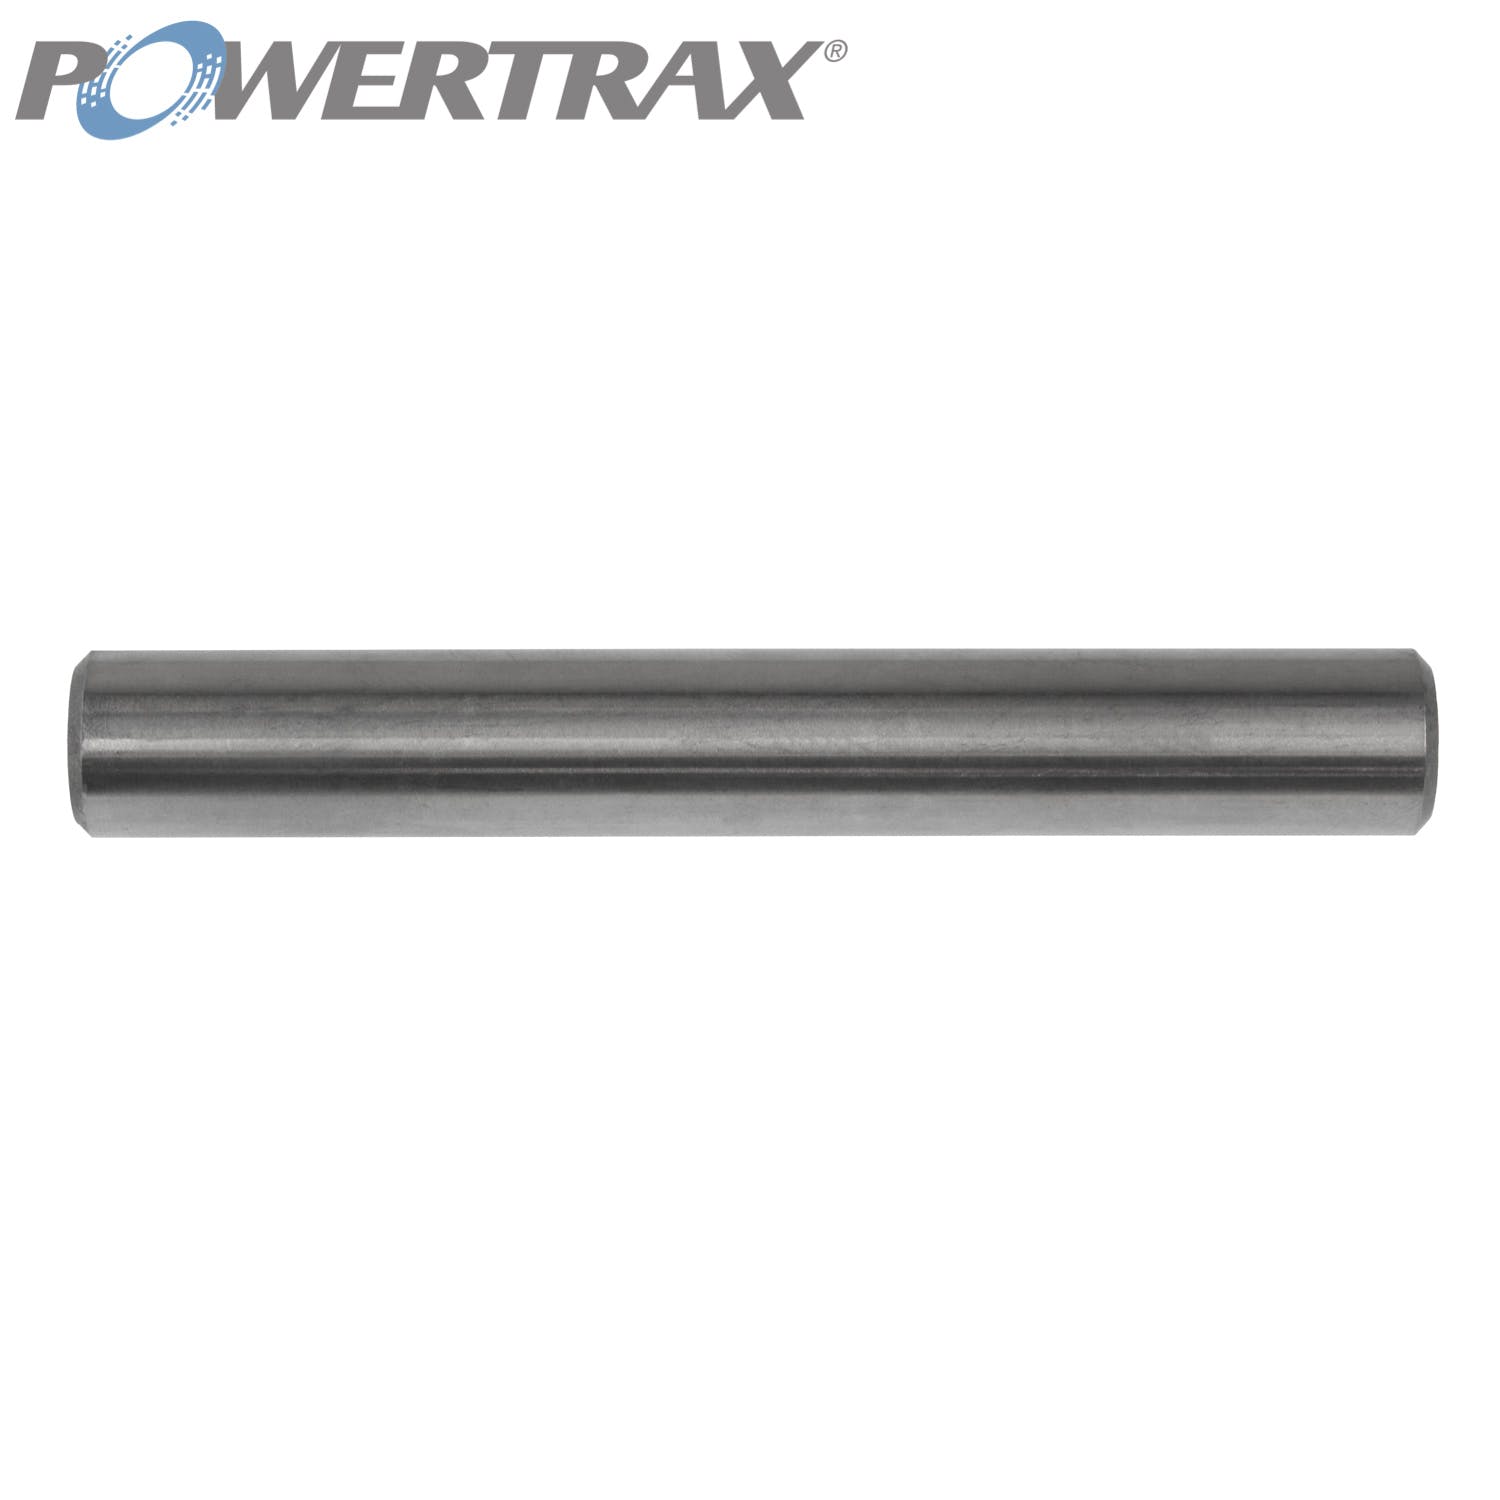 PowerTrax 1510315RAD Differential Pinion Shaft